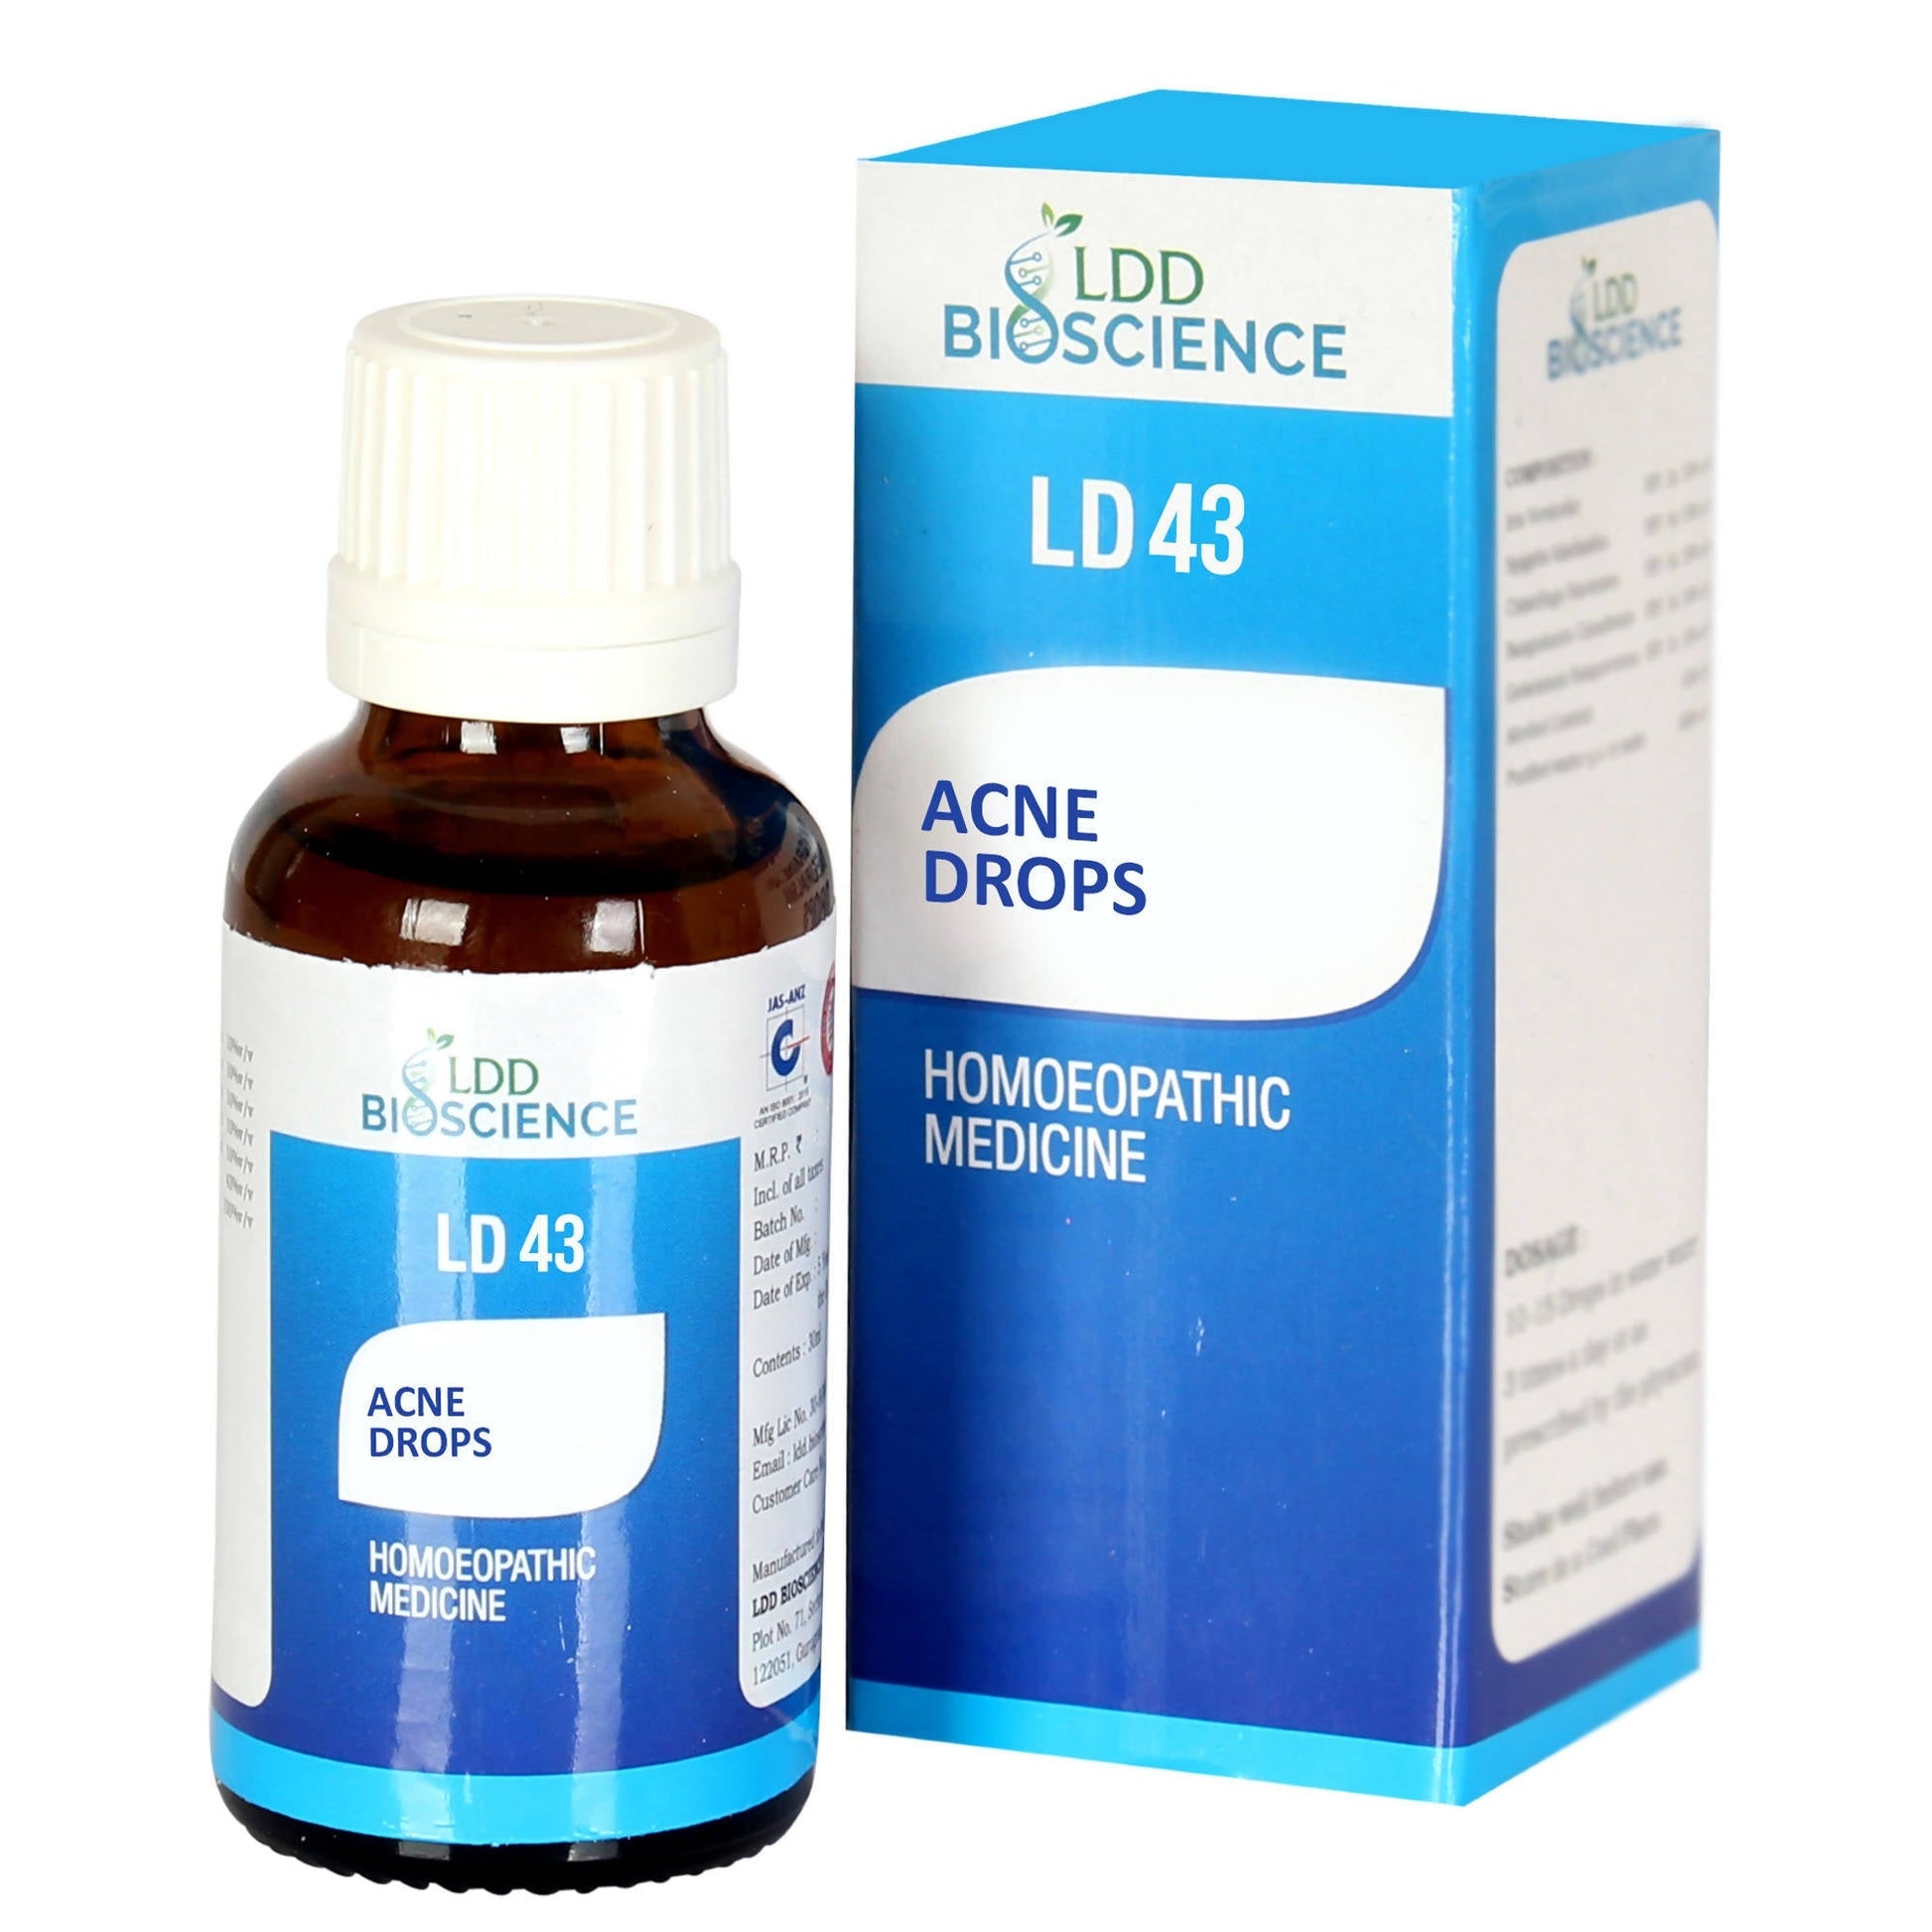 LDD Bioscience Homeopathy LD 43 Drops